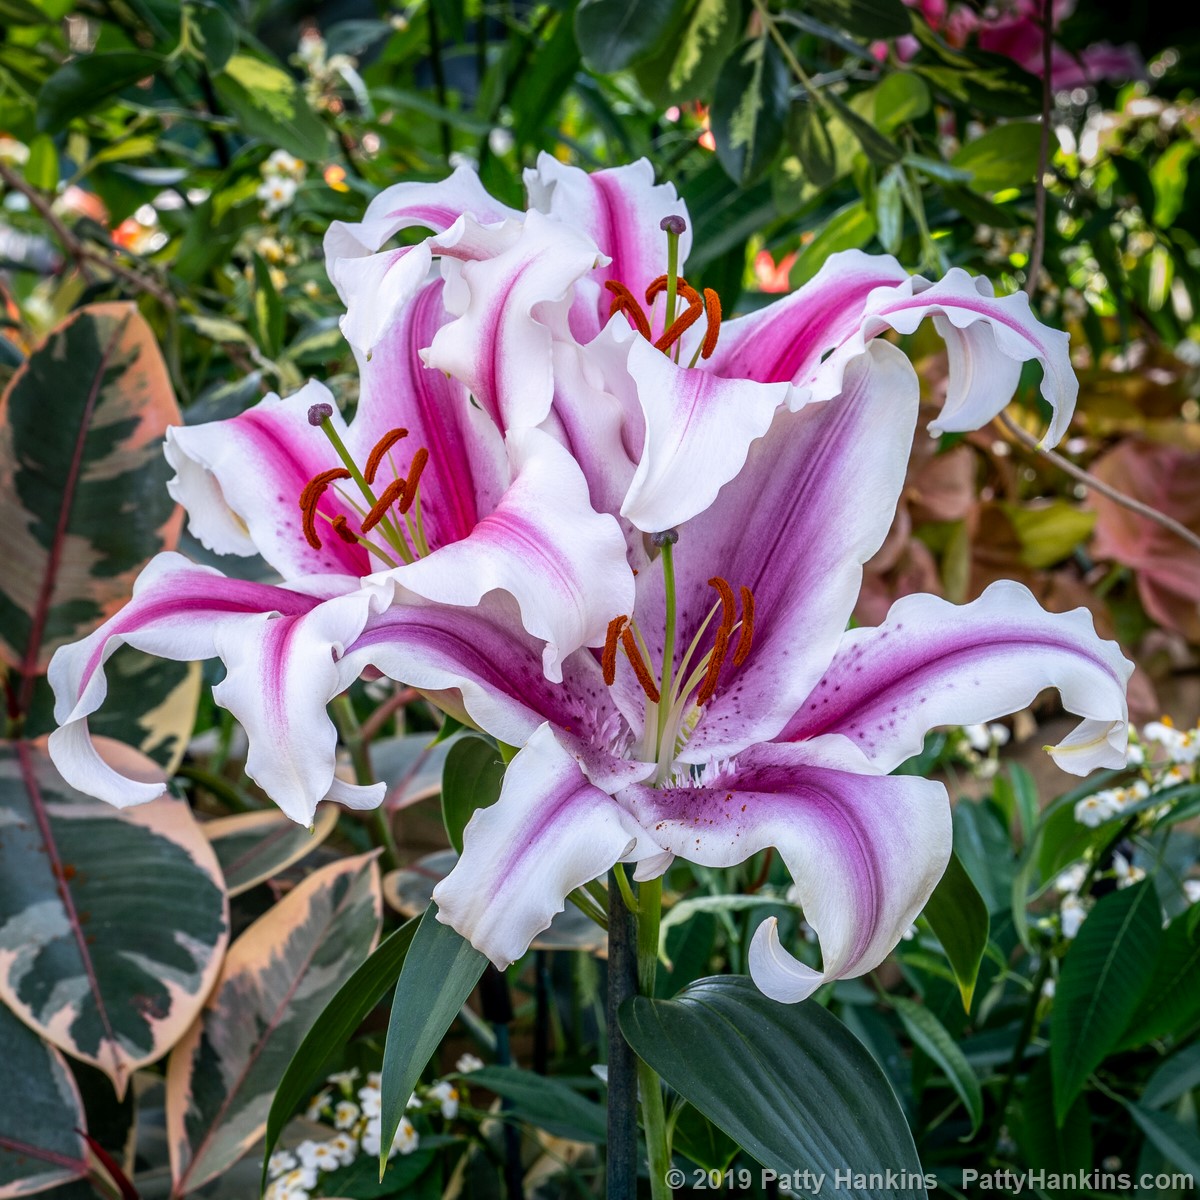 Maytime Lilies © 2019 Patty Hankins